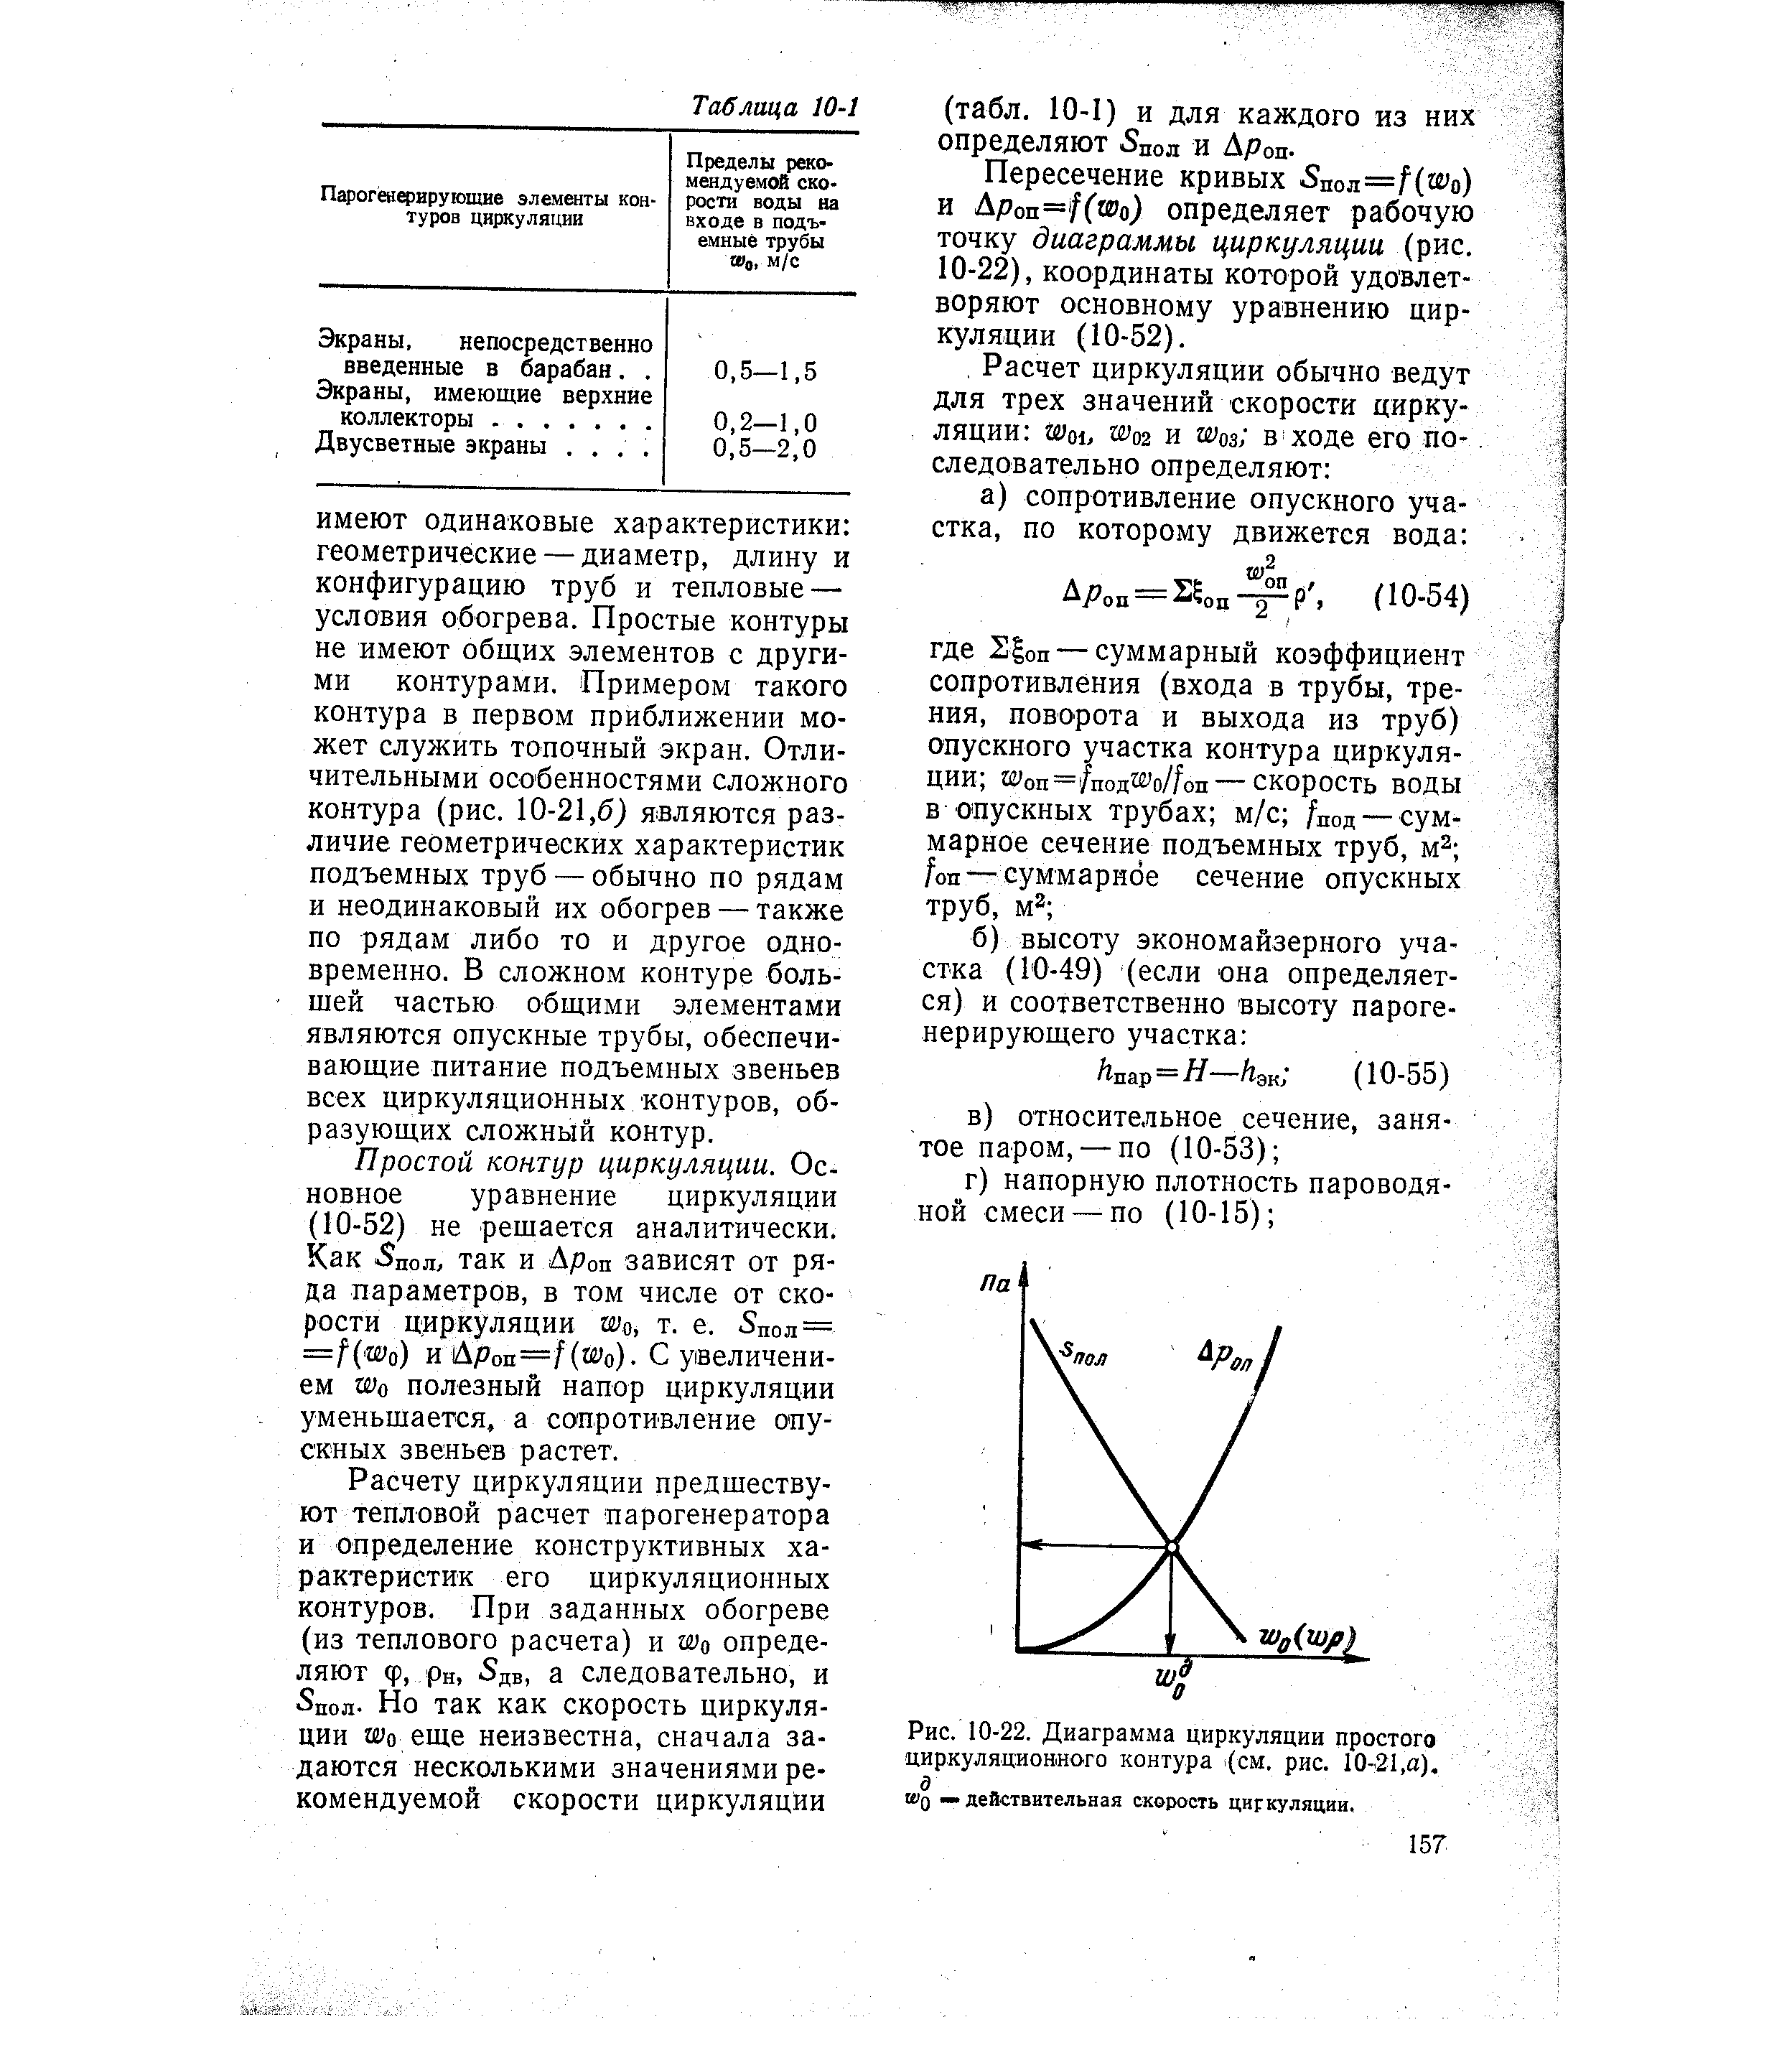 Рис. 10-22. Диаграмма циркуляции простого циркуляционного контура (см. рис. 10-21,а).
